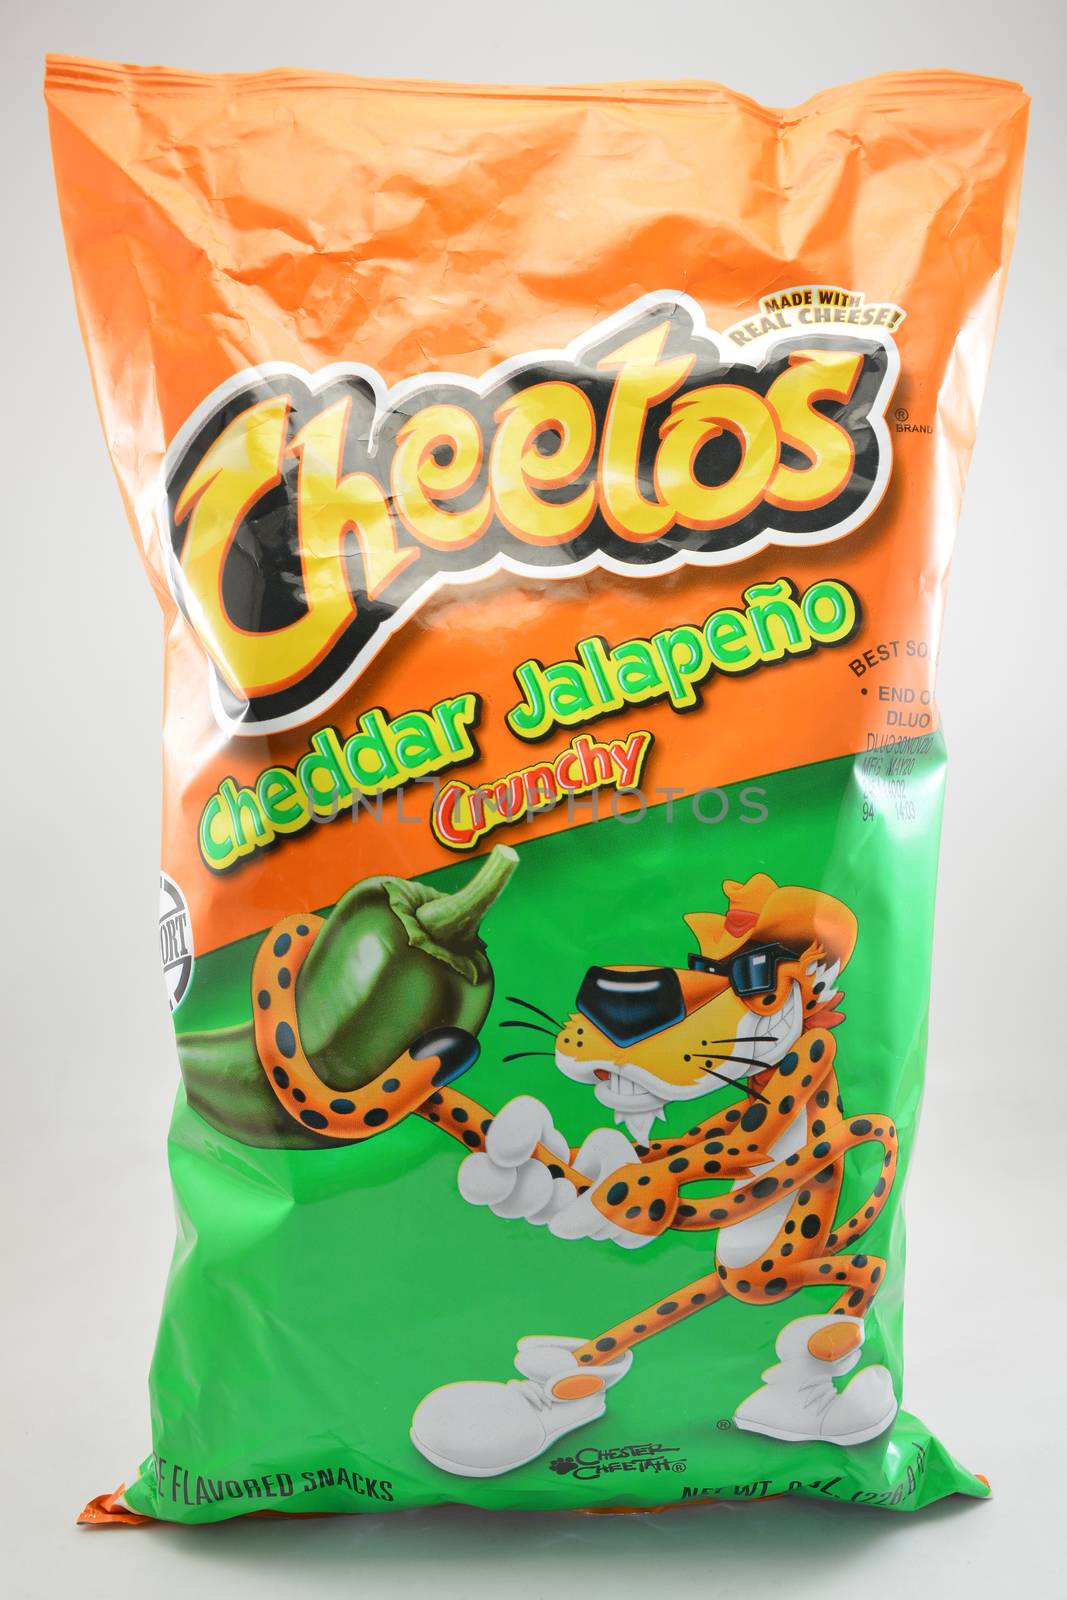 MANILA, PH - SEPT 10 - Cheetos cheddar jalapeno on September 10, 2020 in Manila, Philippines.